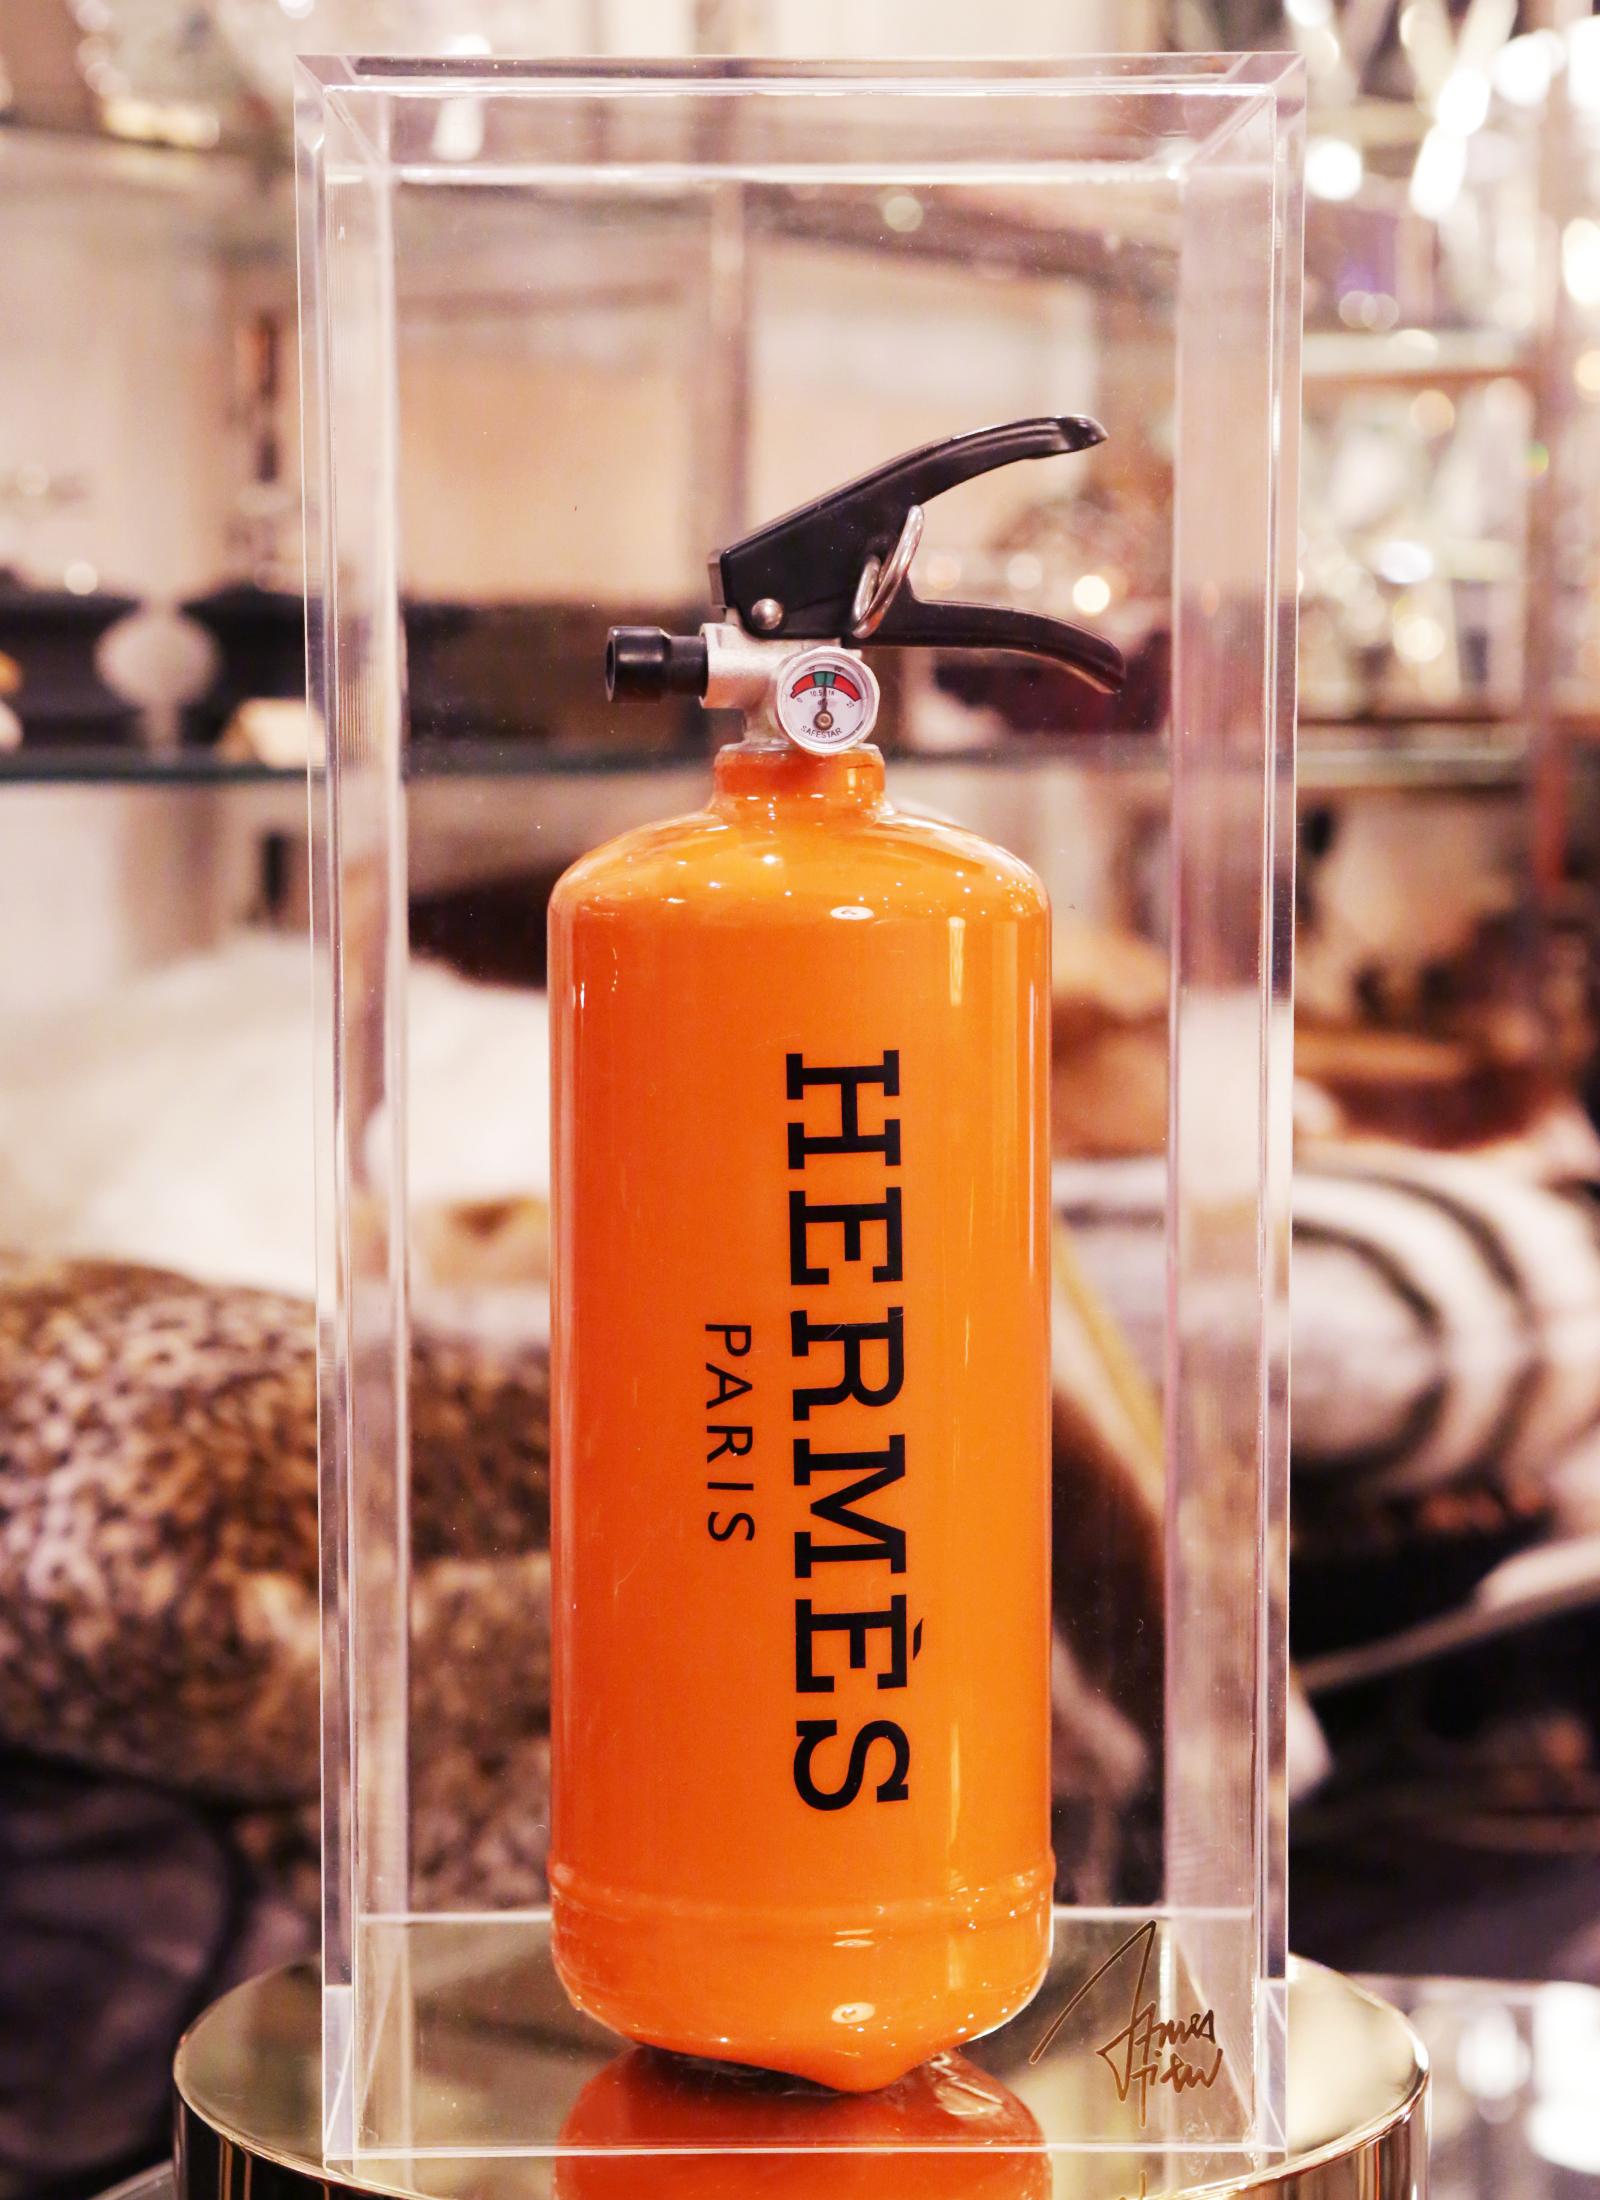 Extinguisher Hermès, Paris.
Limited edition of 25 pieces. Exceptional piece.
Under Plexiglass box.
Measures: box L 20 x D 20 x H 42.5cm.
Extinguisher L 10.5 x D 10.5 x H 35.5cm.